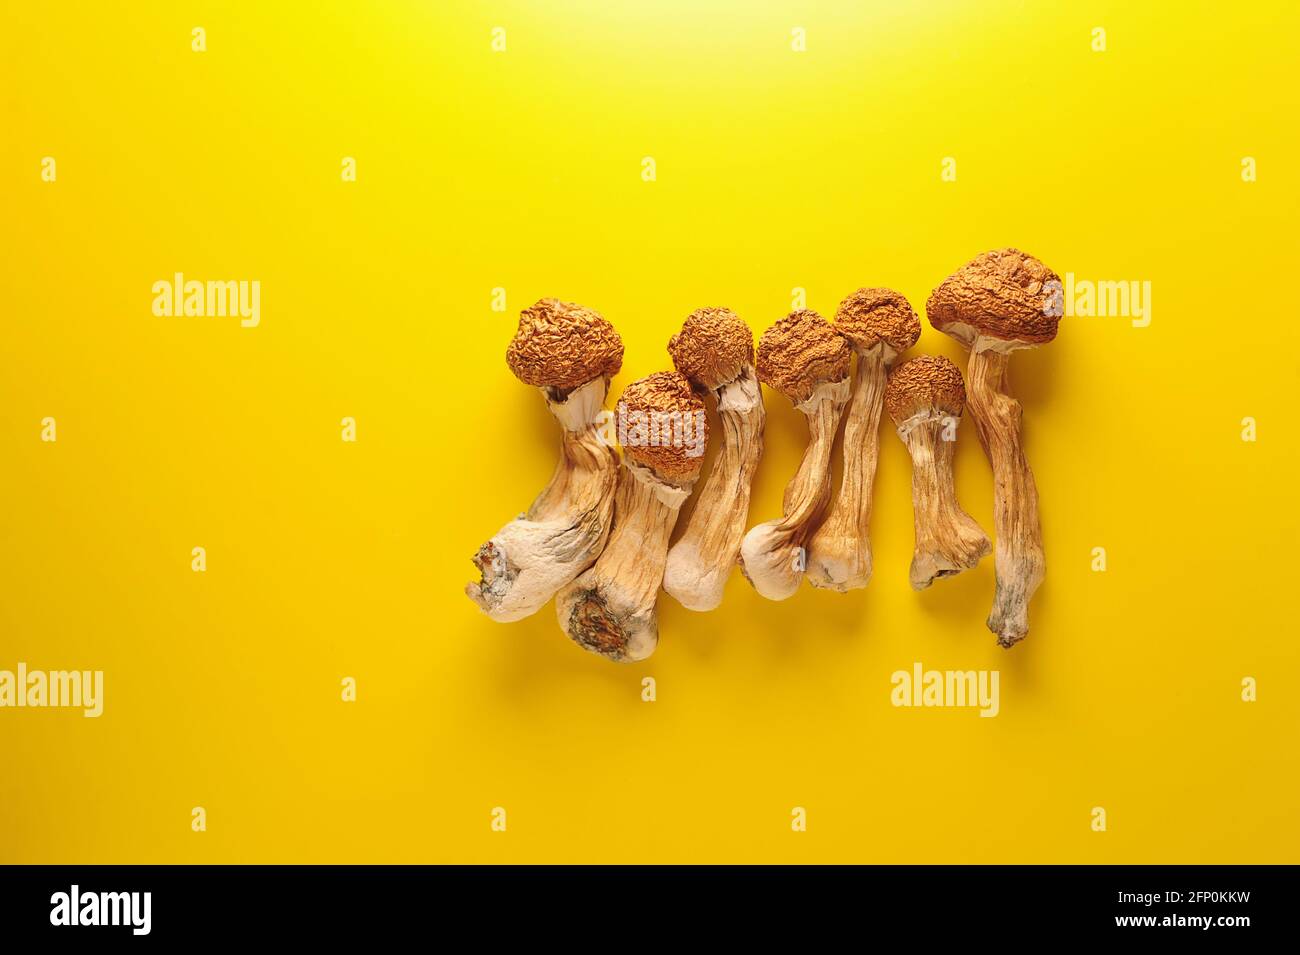 Dry psilocybin mushrooms on yellow background. Psychedelic magic mushroom Golden Teacher. Medical usage. Microdosing concept. Stock Photo